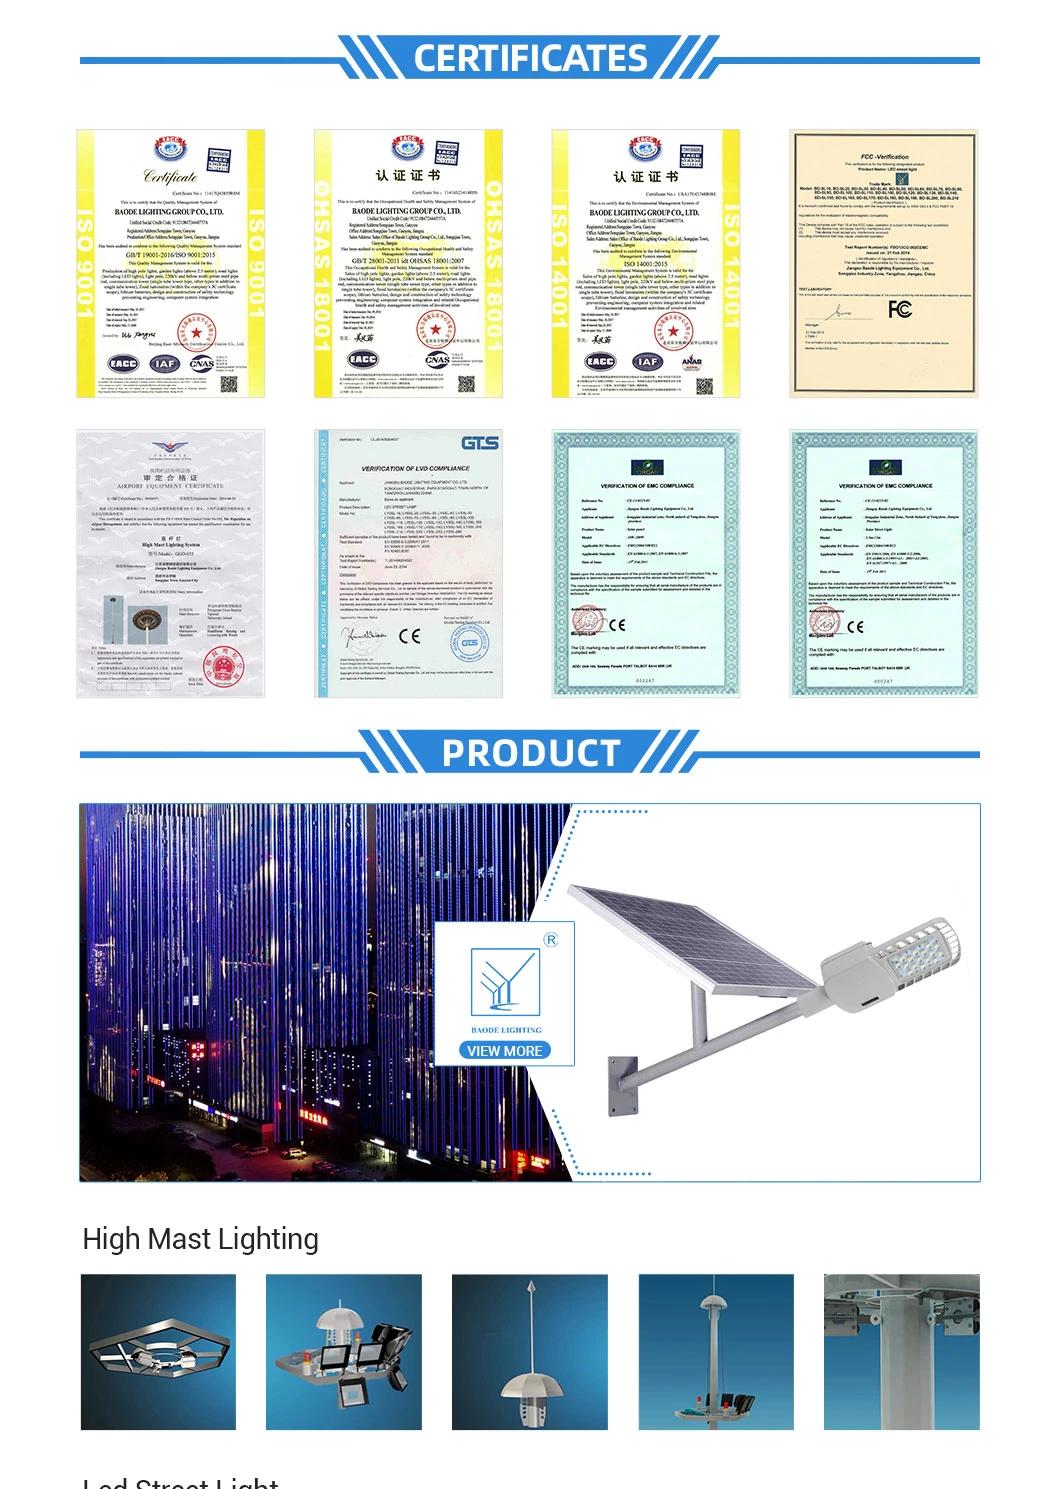 Baode Lights Outdoor 22m Outdoor High Mast Lighting with Airport Certificate Low Price